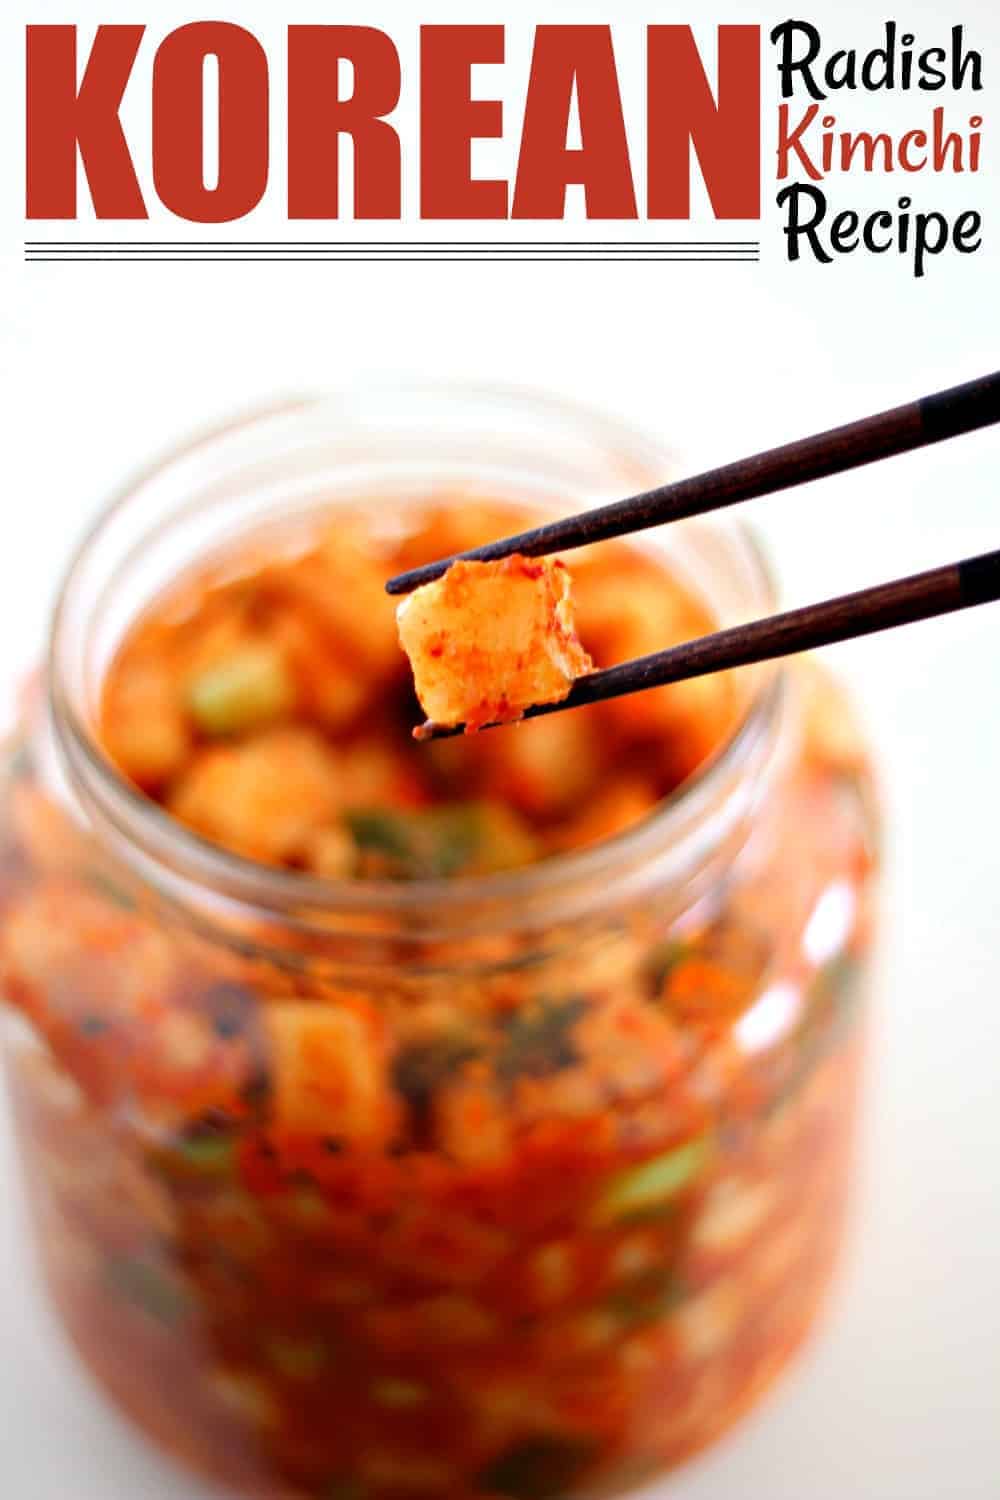 Chopsticks holding radish kimchi